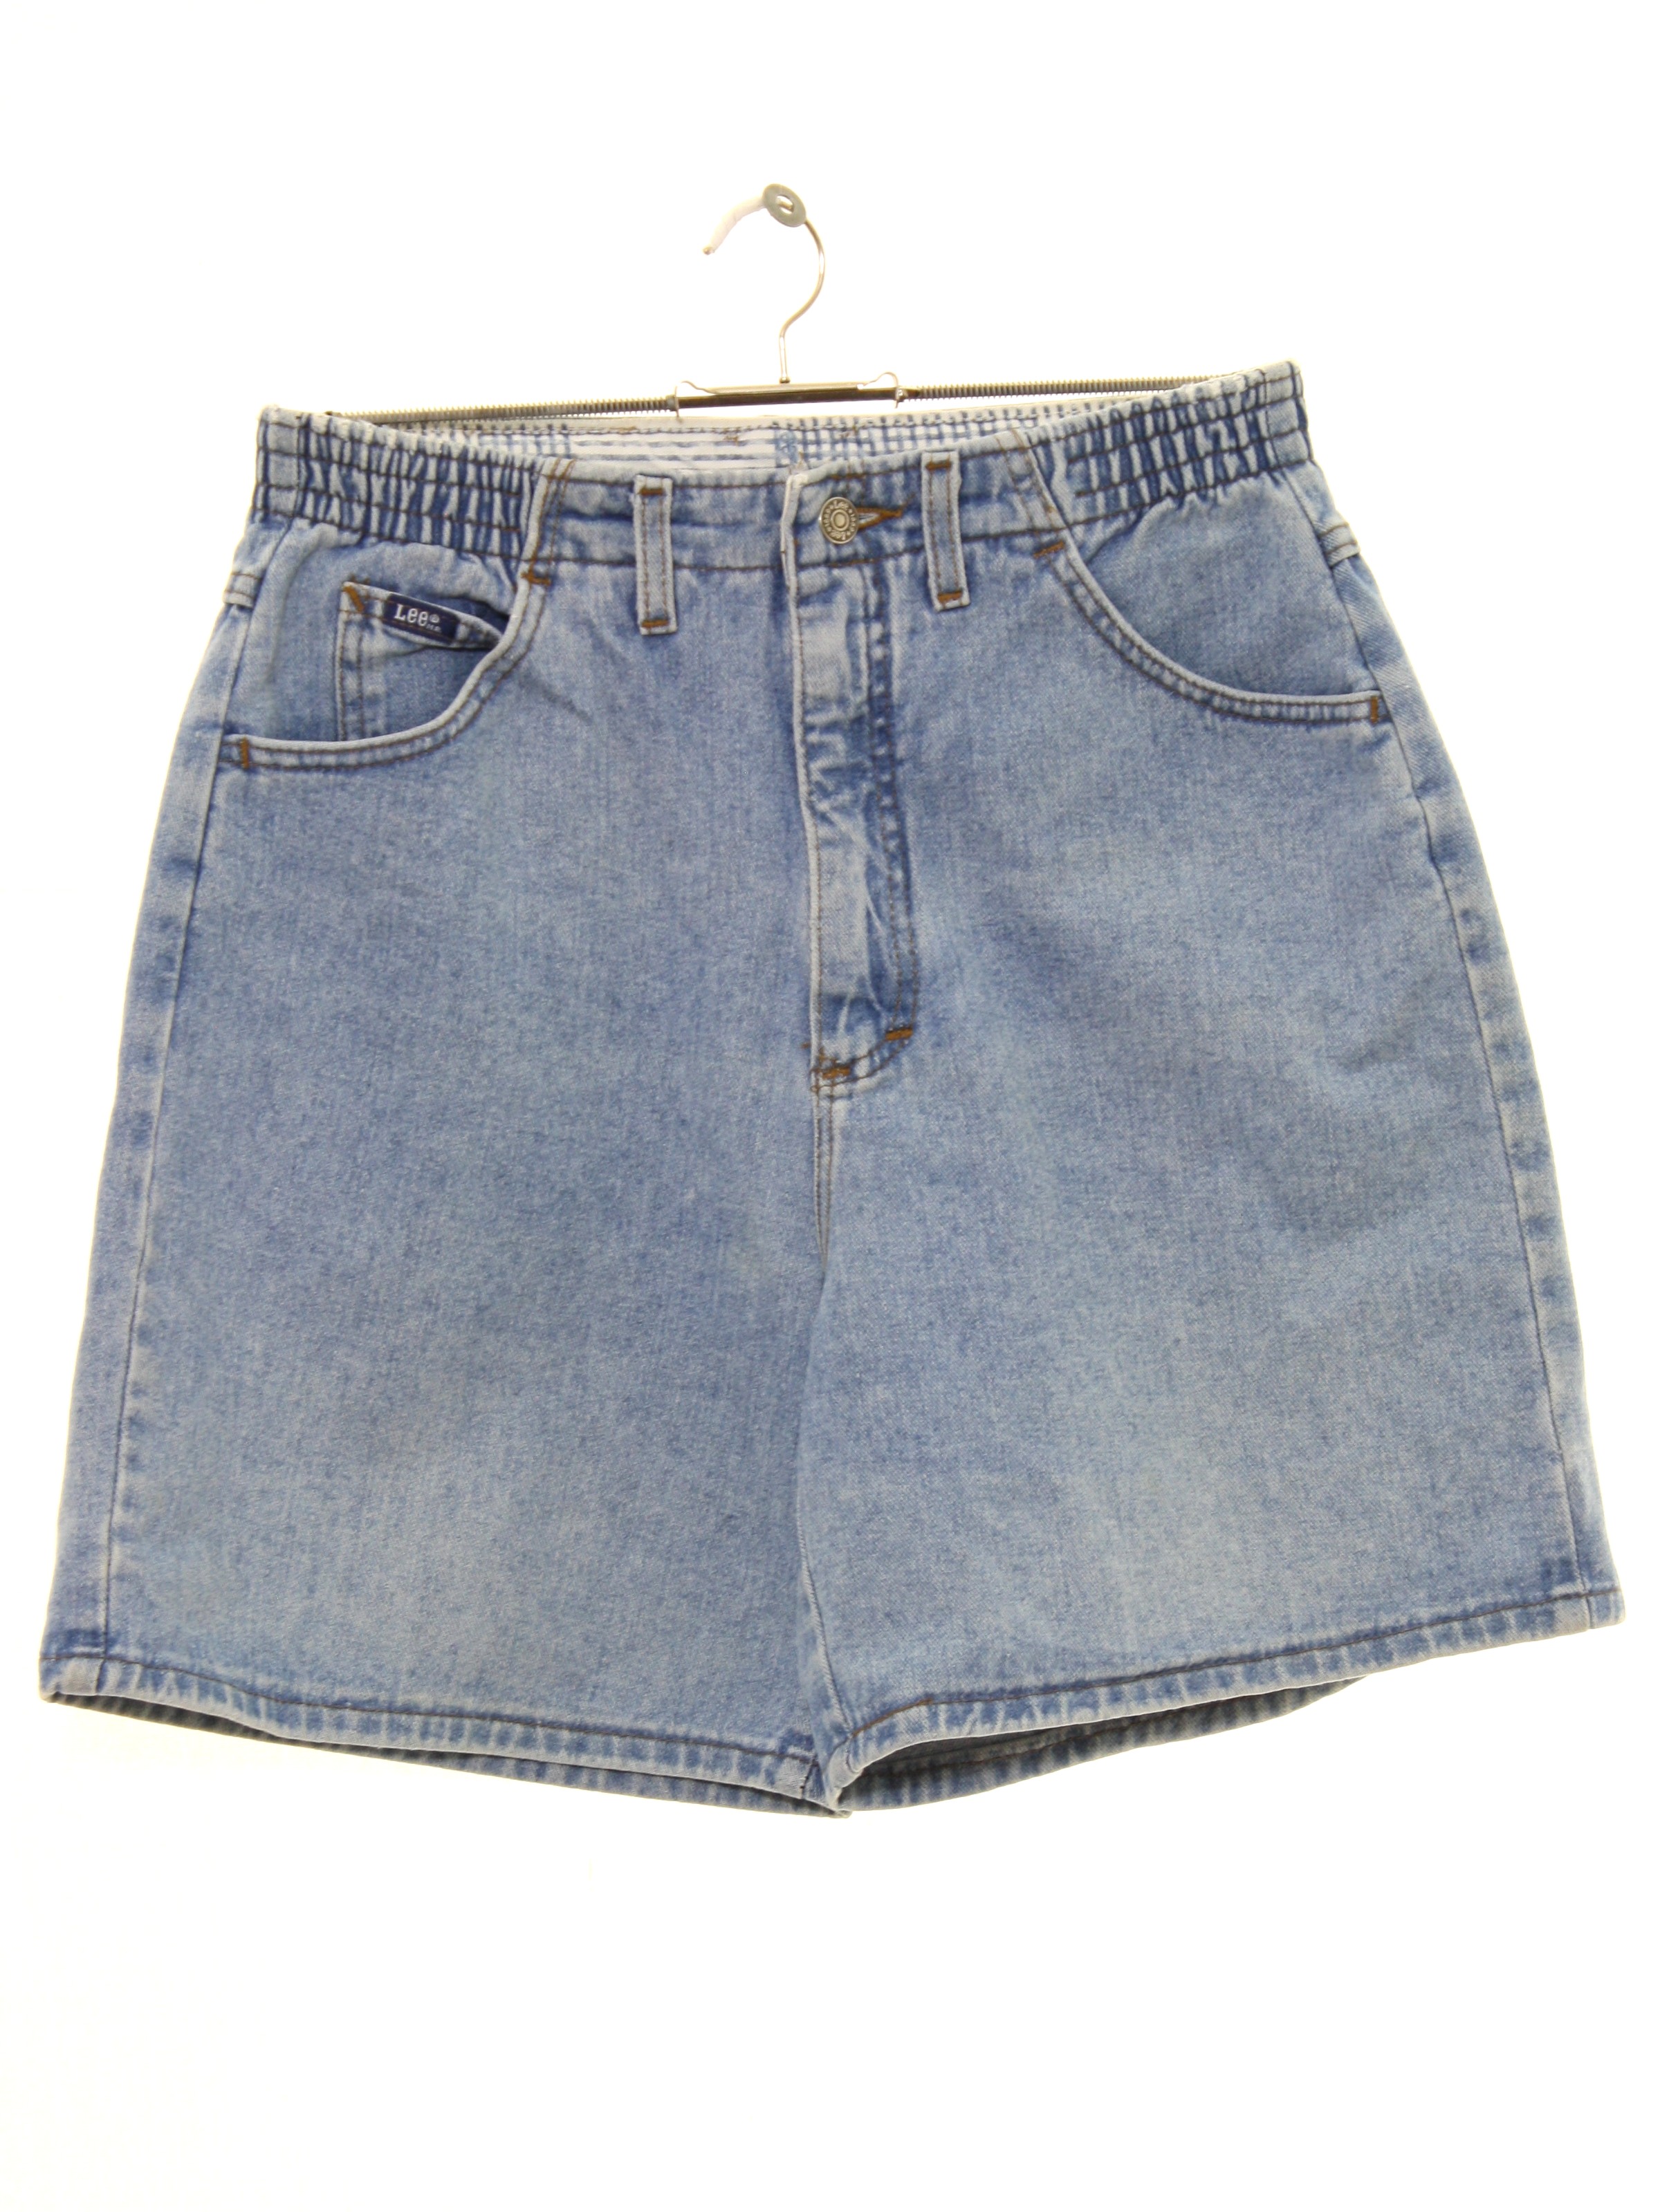 80s Retro Shorts: 80s -Lee- Womens faded blue cotton denim shorts. Wide ...